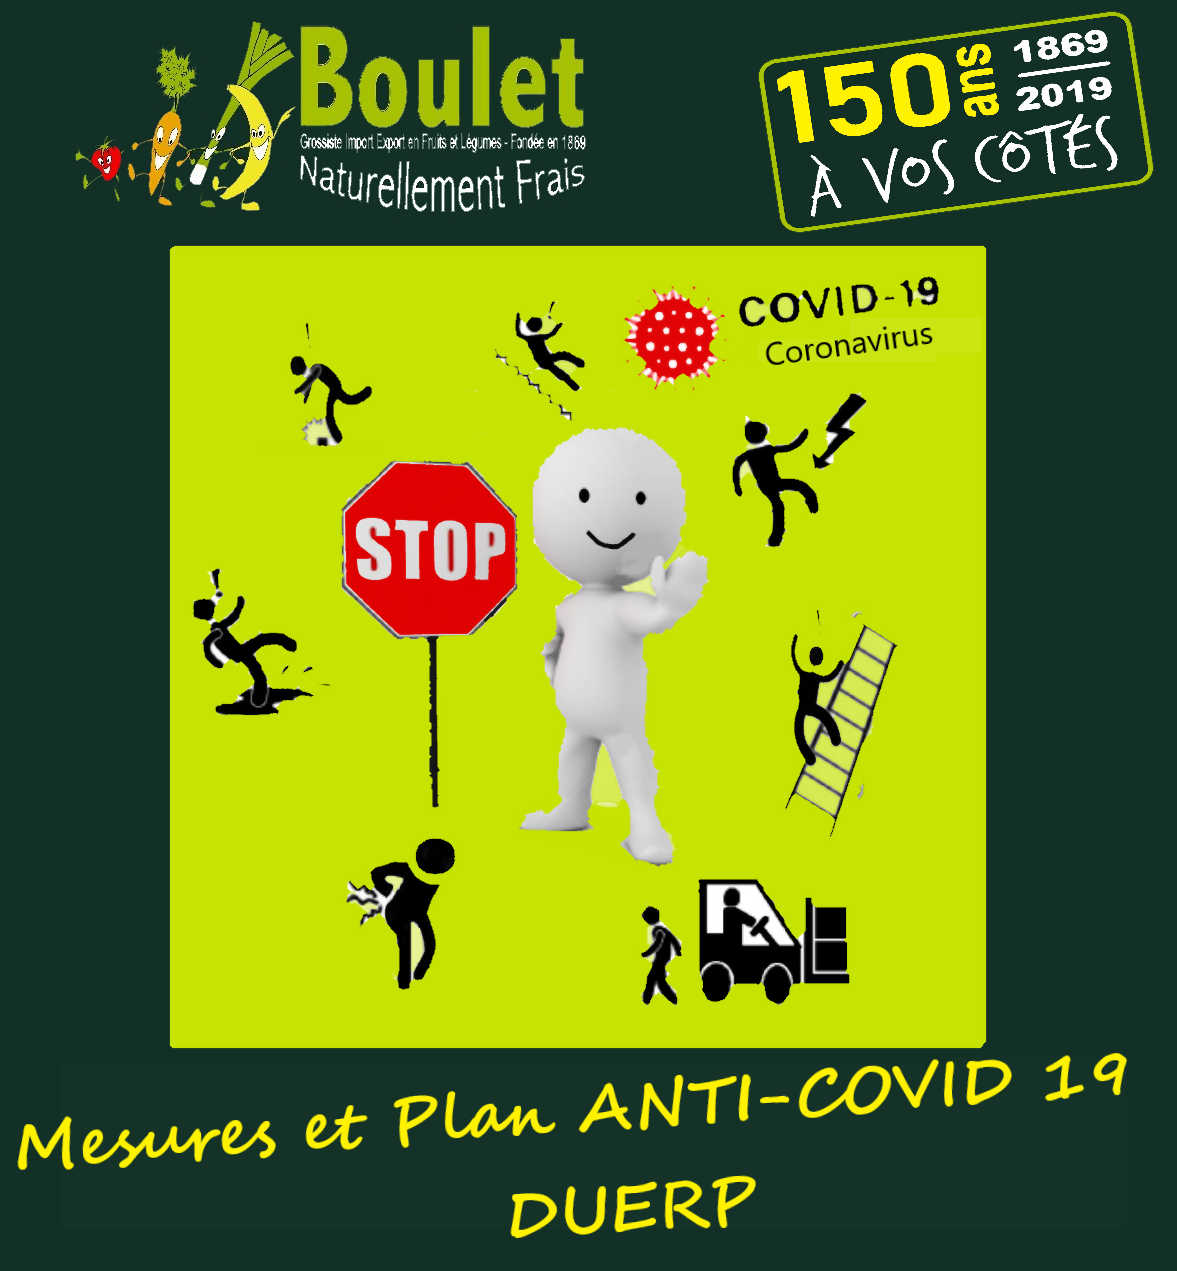 BOULET F&L Plan mesures sanitaire anti-COVID-19 (DUERP) GALERY.jpg